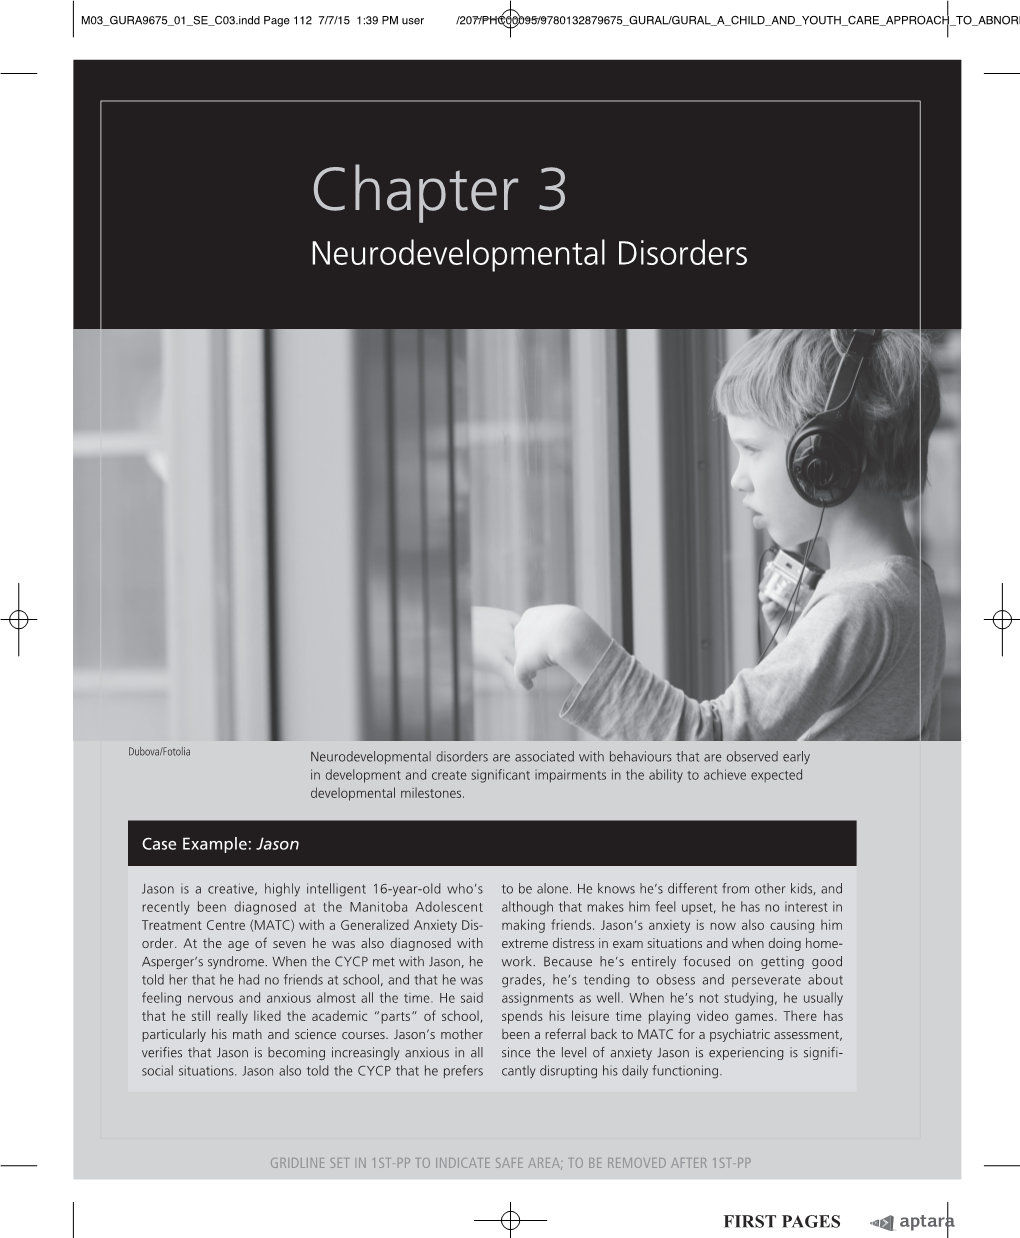 Chapter 3 Neurodevelopmental Disorders